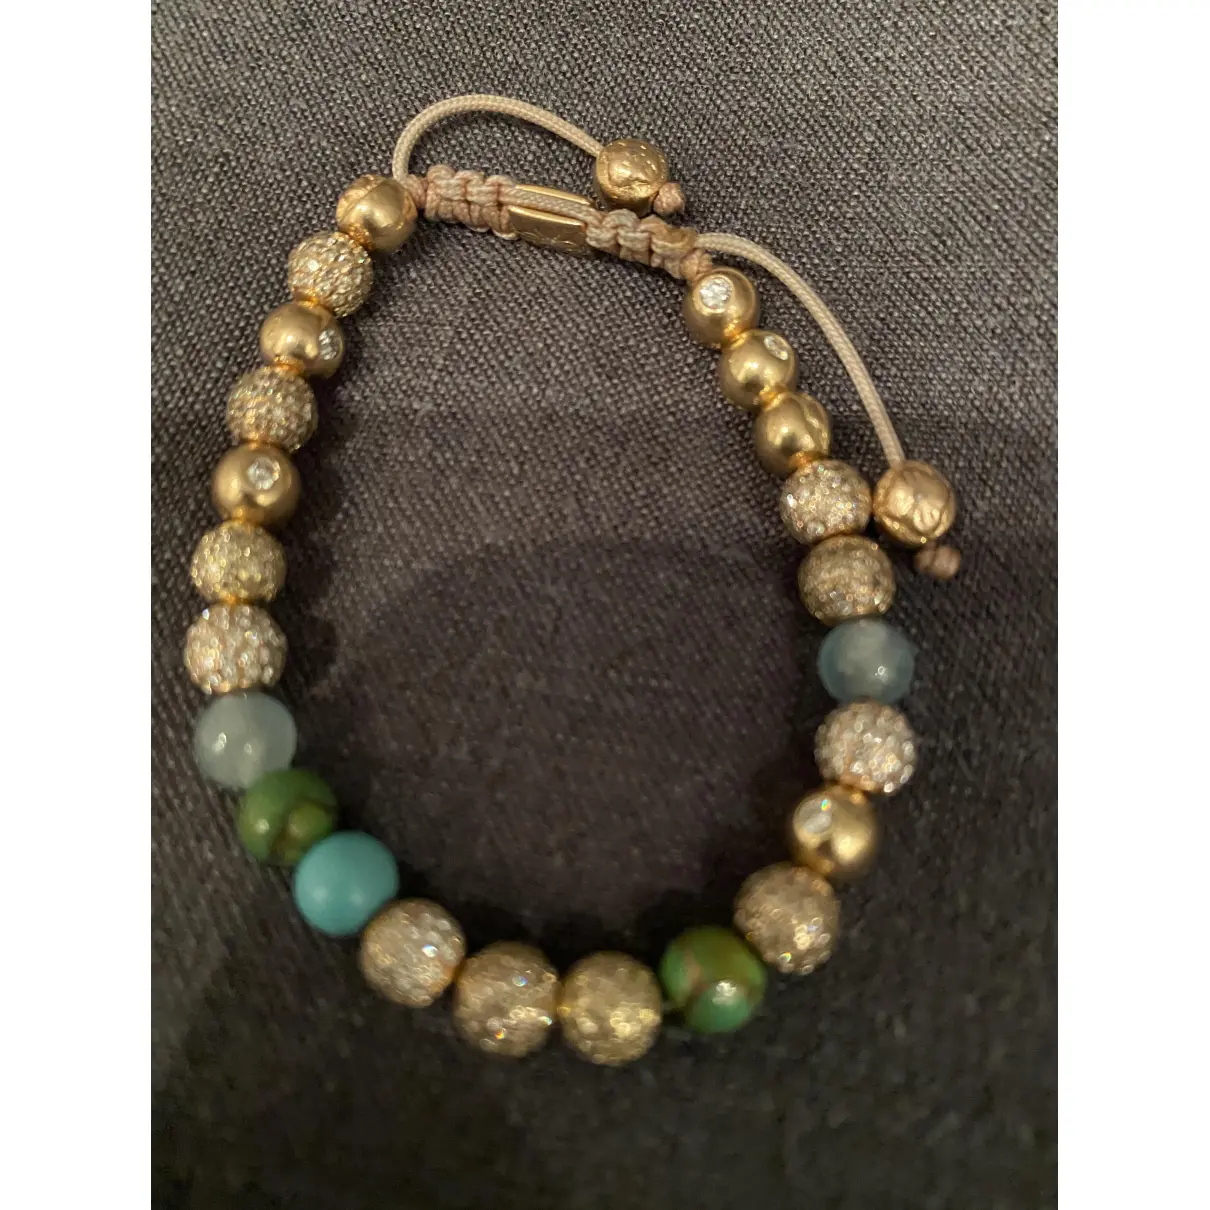 Buy Shamballa Jewels Yellow gold bracelet online